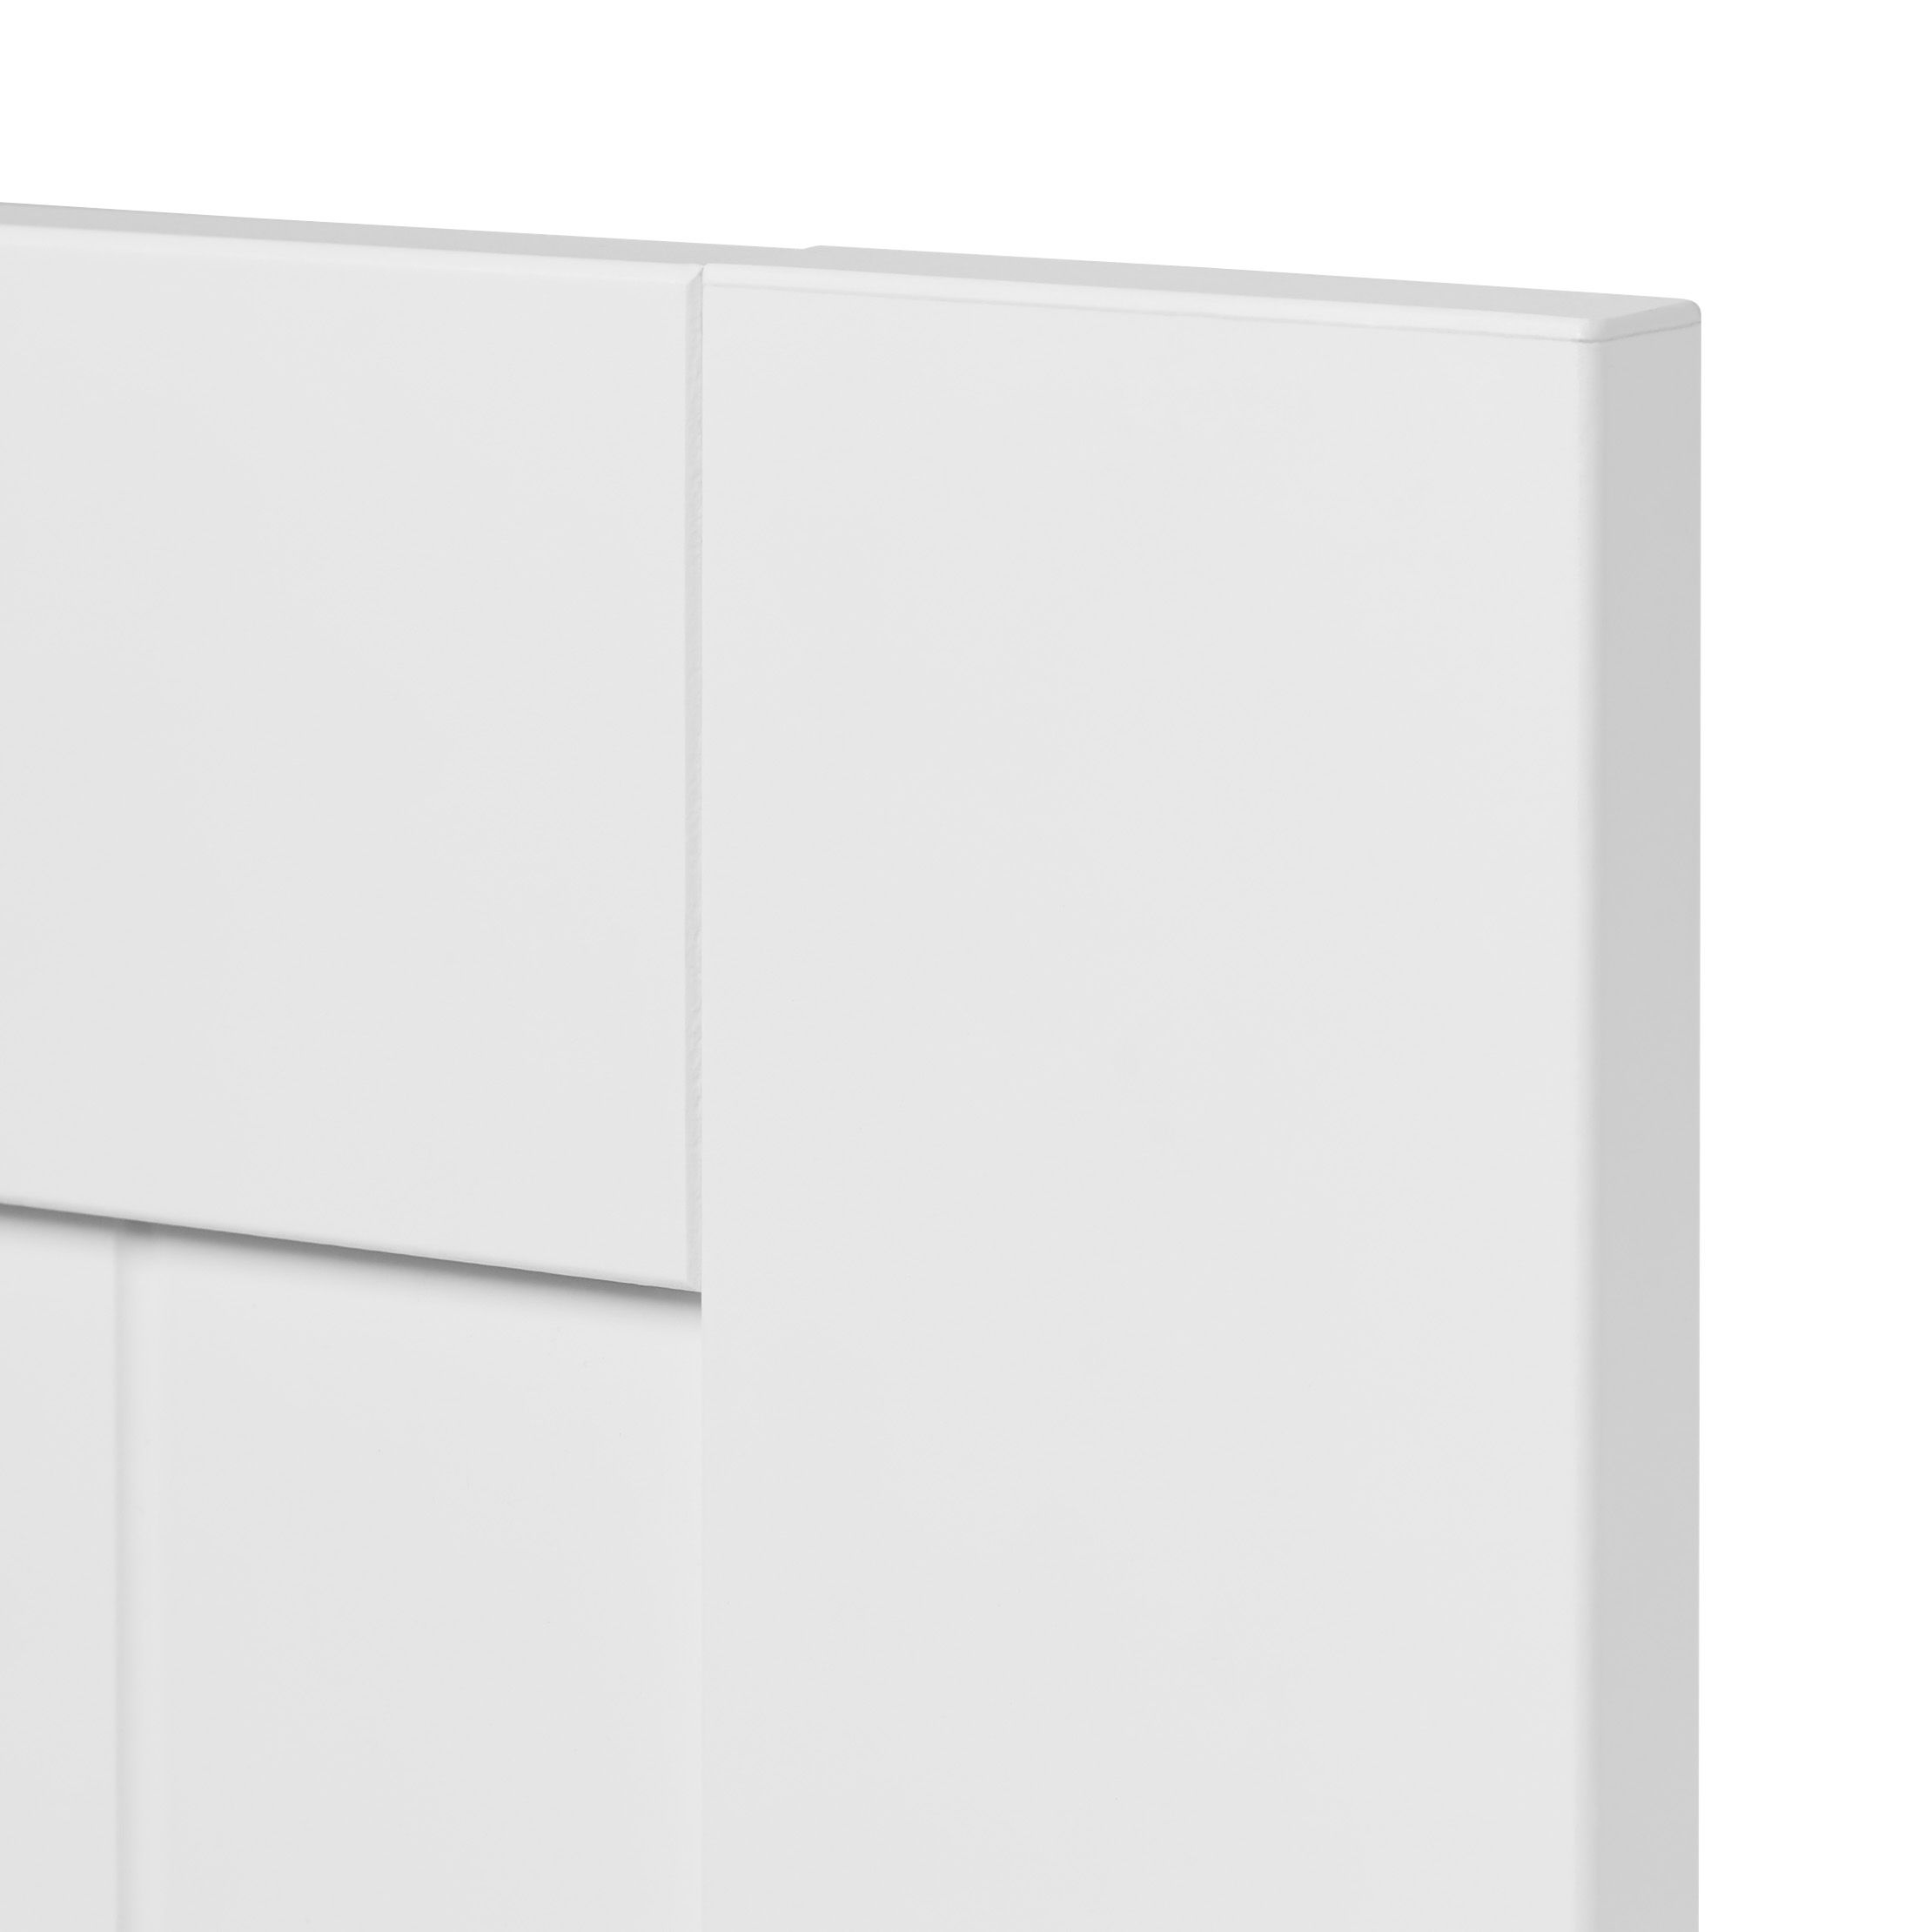 GoodHome Alpinia Matt white tongue & groove shaker Tall appliance Cabinet door (W)600mm (H)633mm (T)18mm